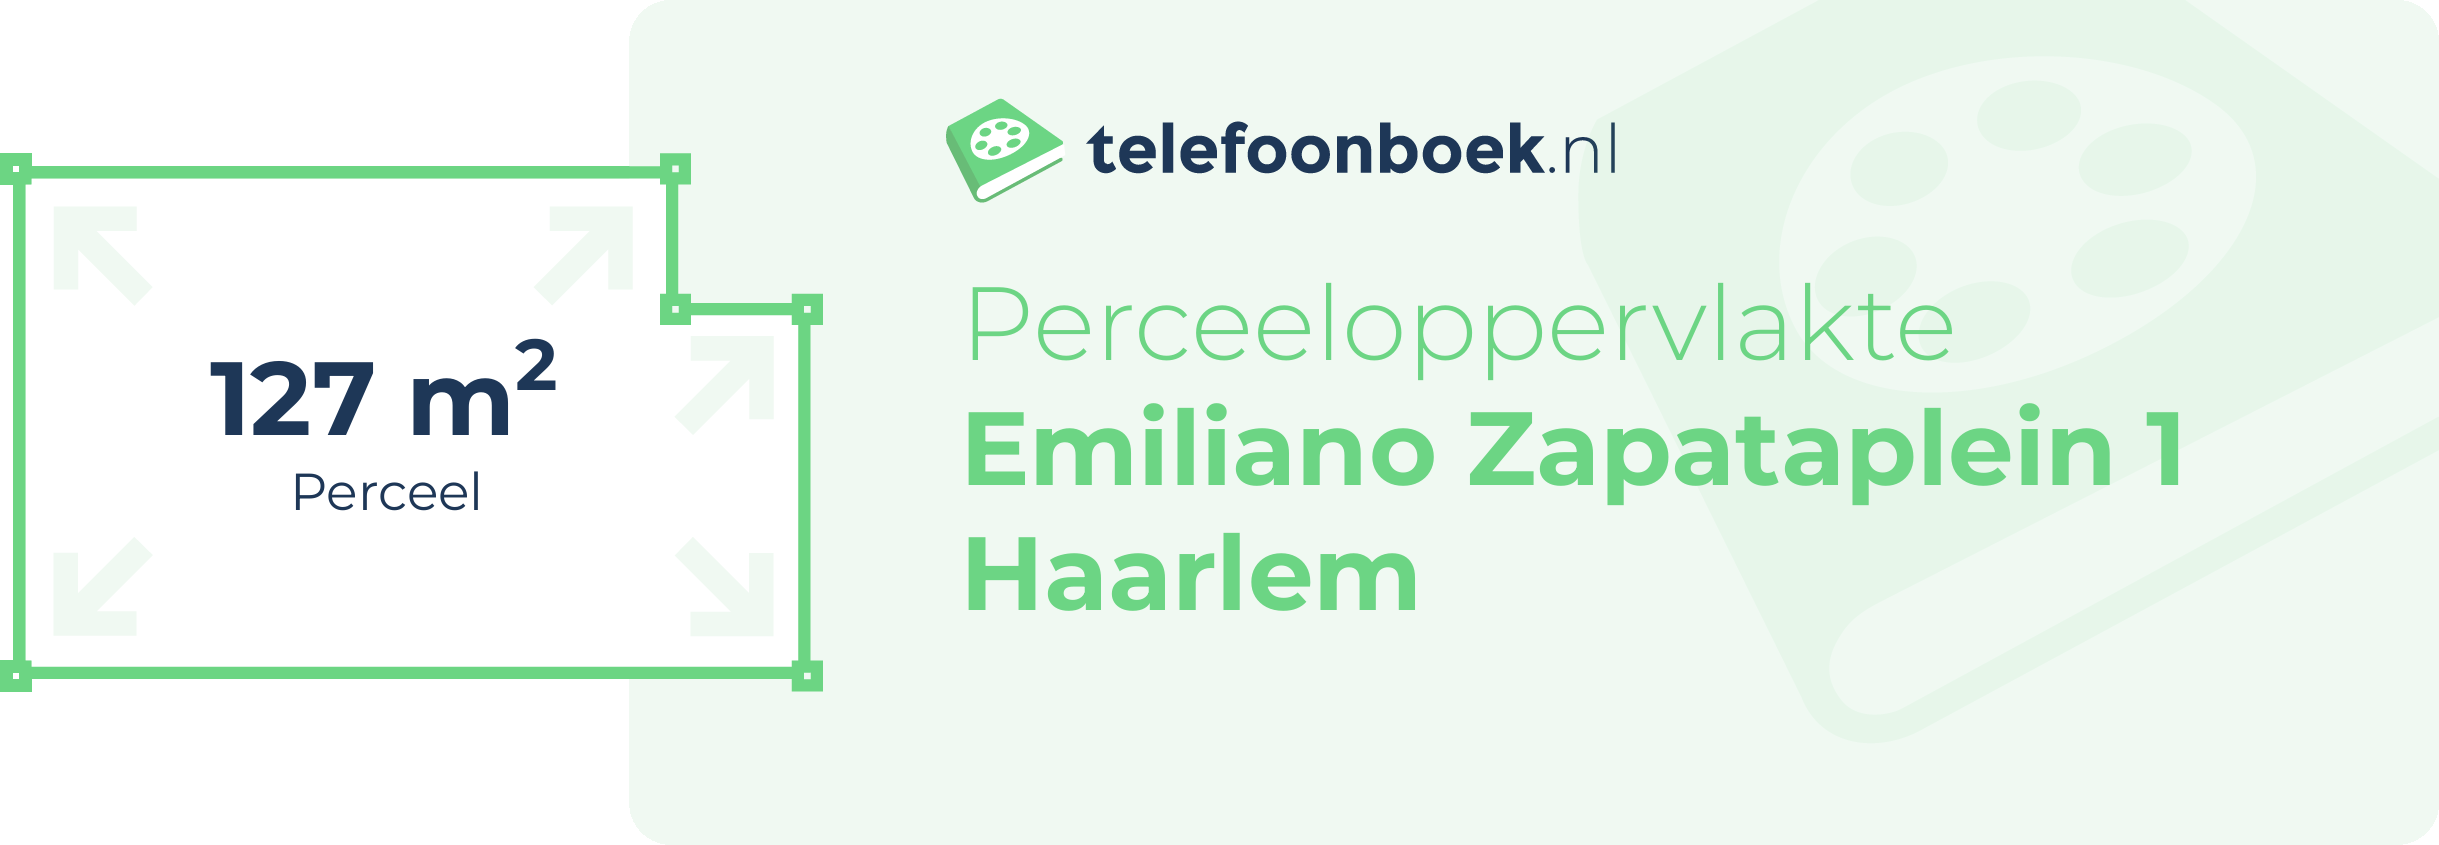 Perceeloppervlakte Emiliano Zapataplein 1 Haarlem